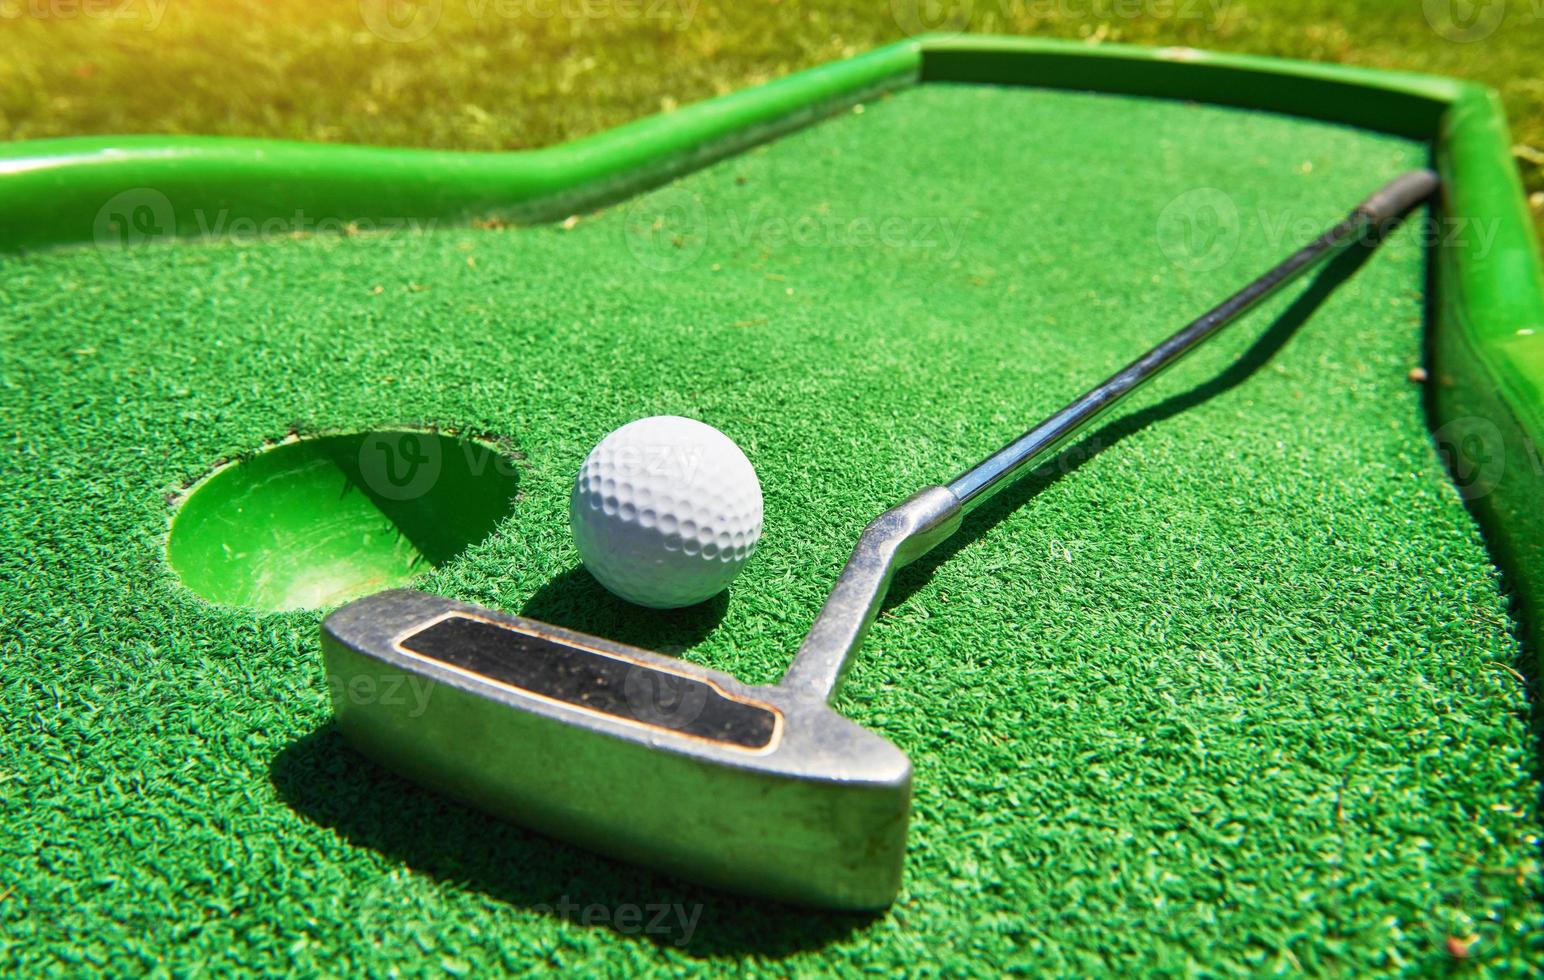 Golf ball and Golf Club on Artificial Grass photo